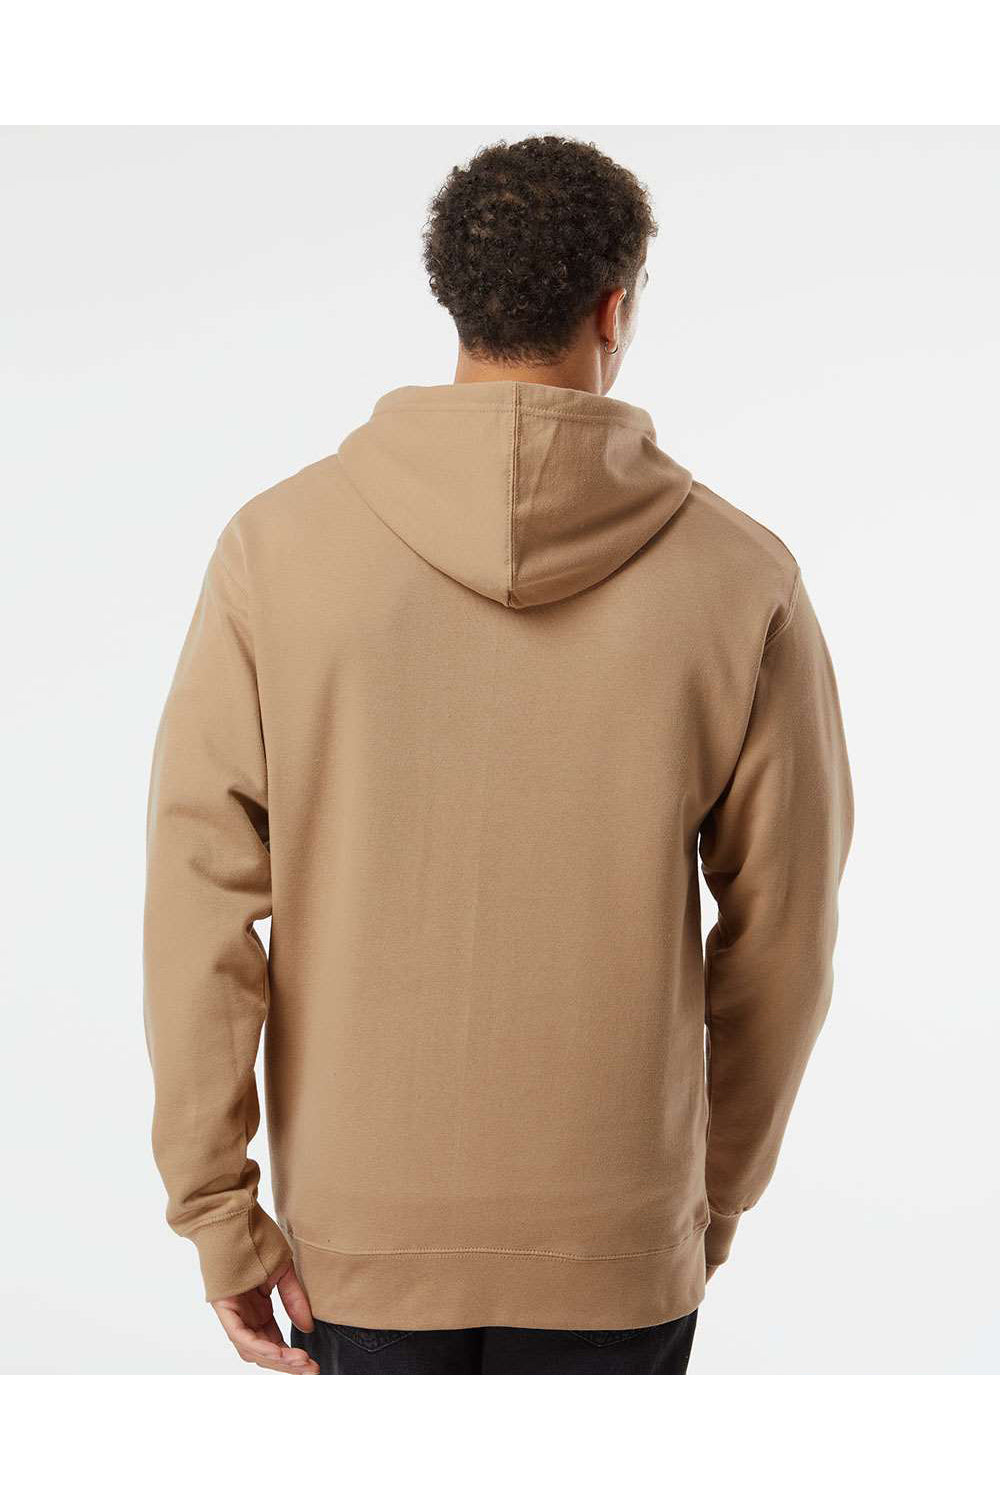 Independent Trading Co. SS4500 Mens Hooded Sweatshirt Hoodie Sandstone Brown Model Back